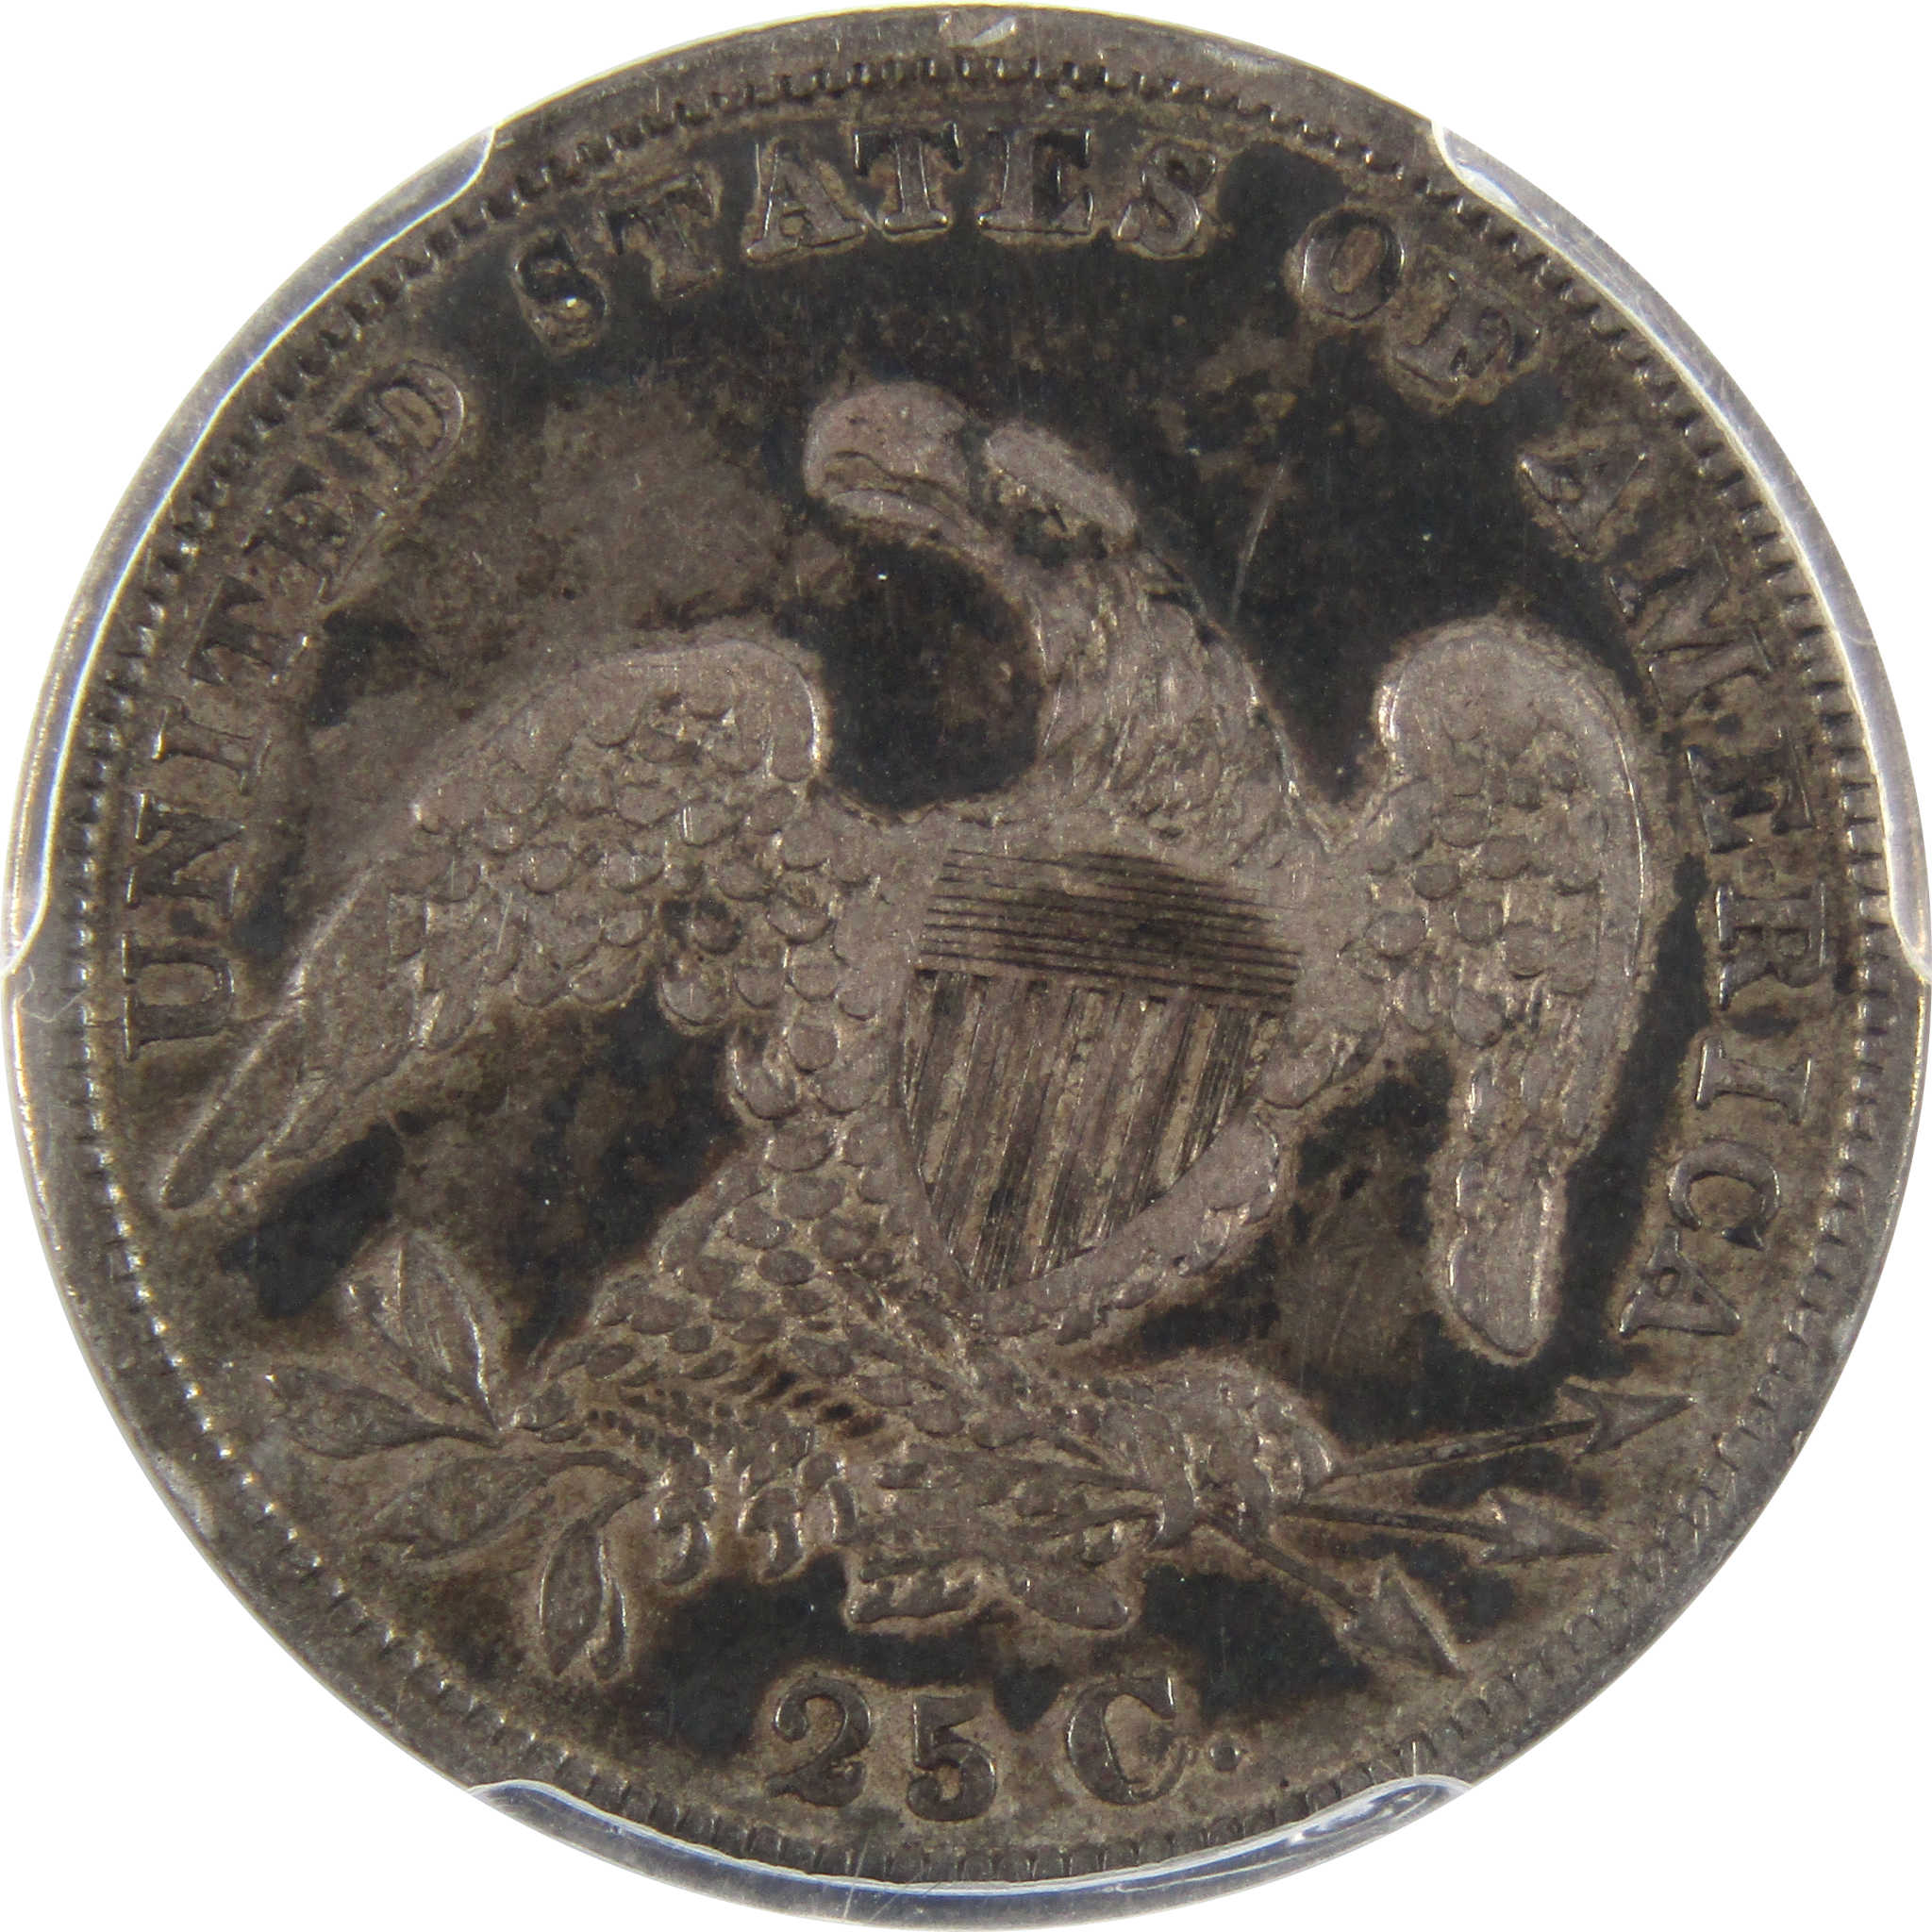 1835 Capped Bust Quarter VF 30 PCGS 89.24% Silver 25c Coin SKU:I8695